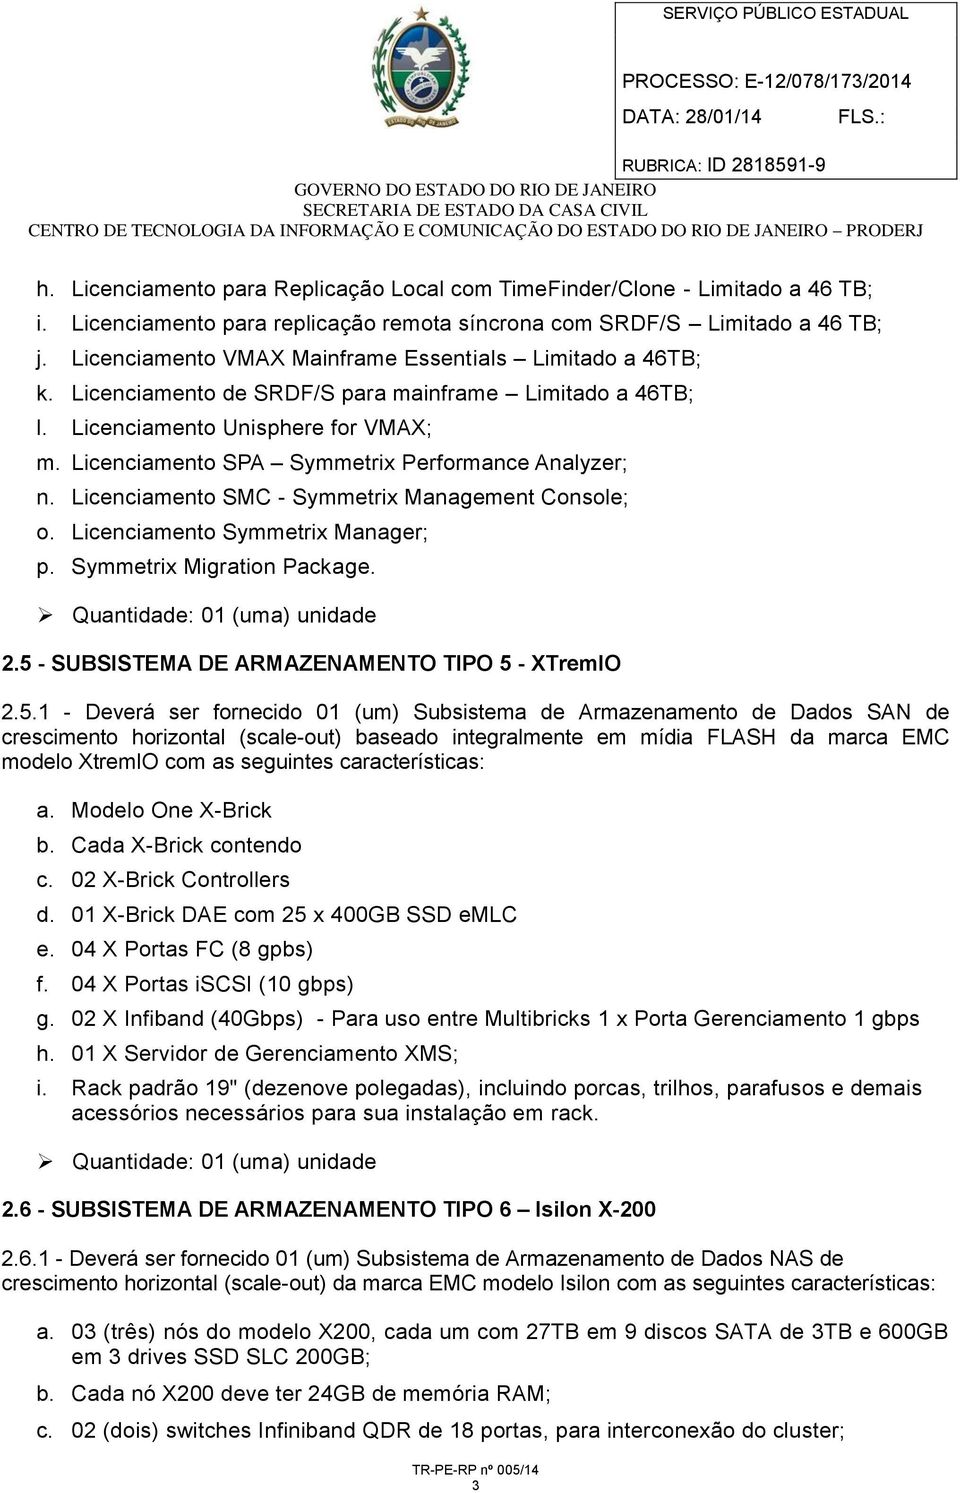 Licenciamento SPA Symmetrix Performance Analyzer; n. Licenciamento SMC - Symmetrix Management Console; o. Licenciamento Symmetrix Manager; p. Symmetrix Migration Package.